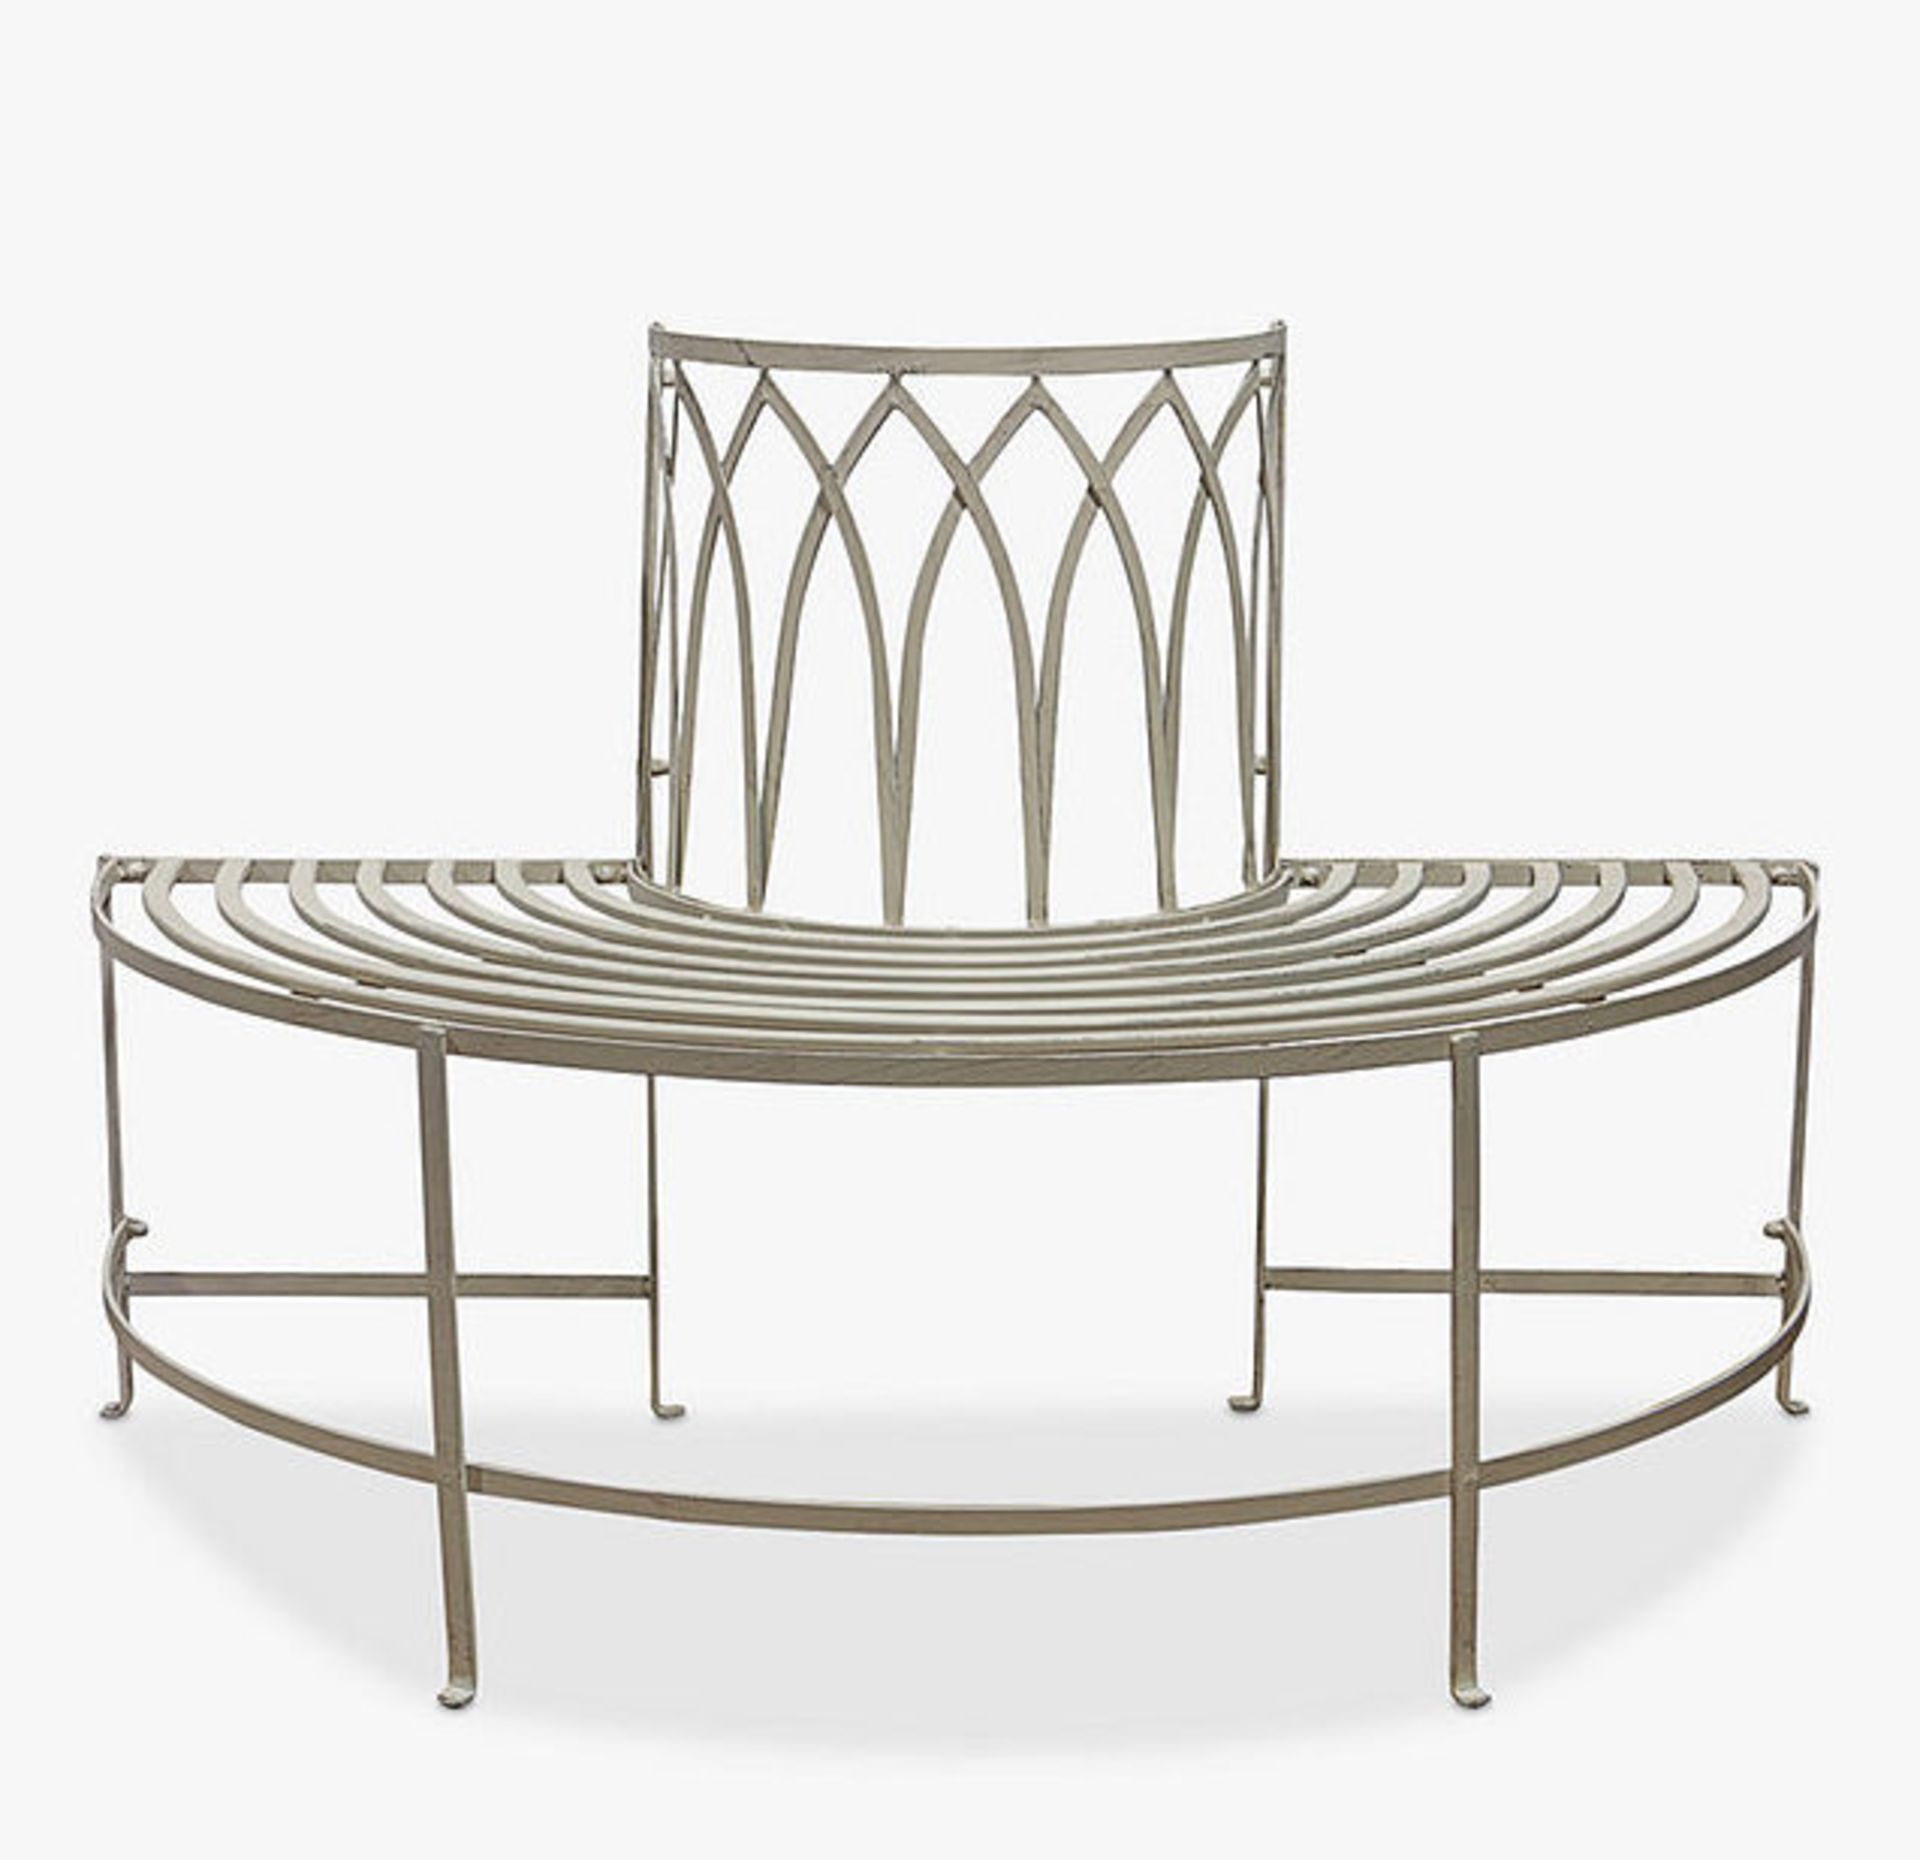 John Lewis Gallery Maggio 2-Seater Metal Garden Tree Bench, White- PRICED £225